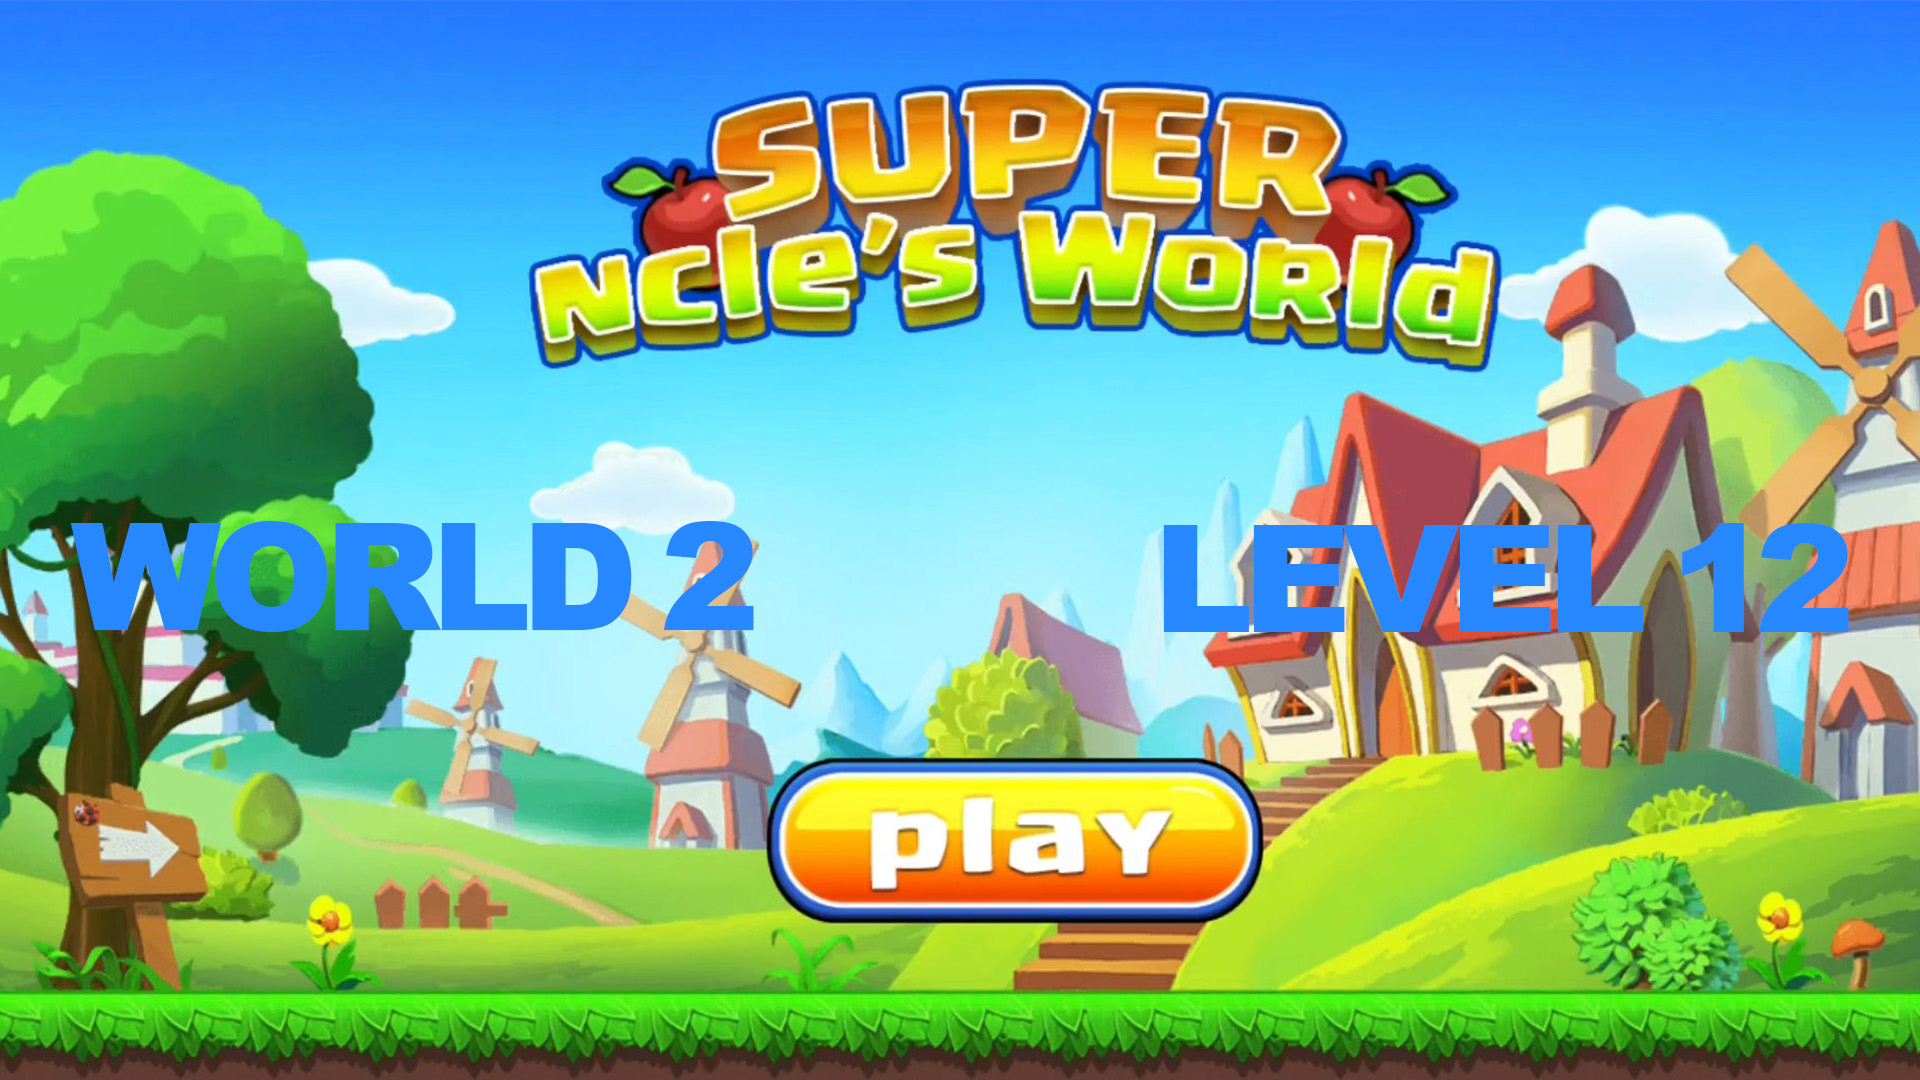 Super ncle's  World 2. level 12.